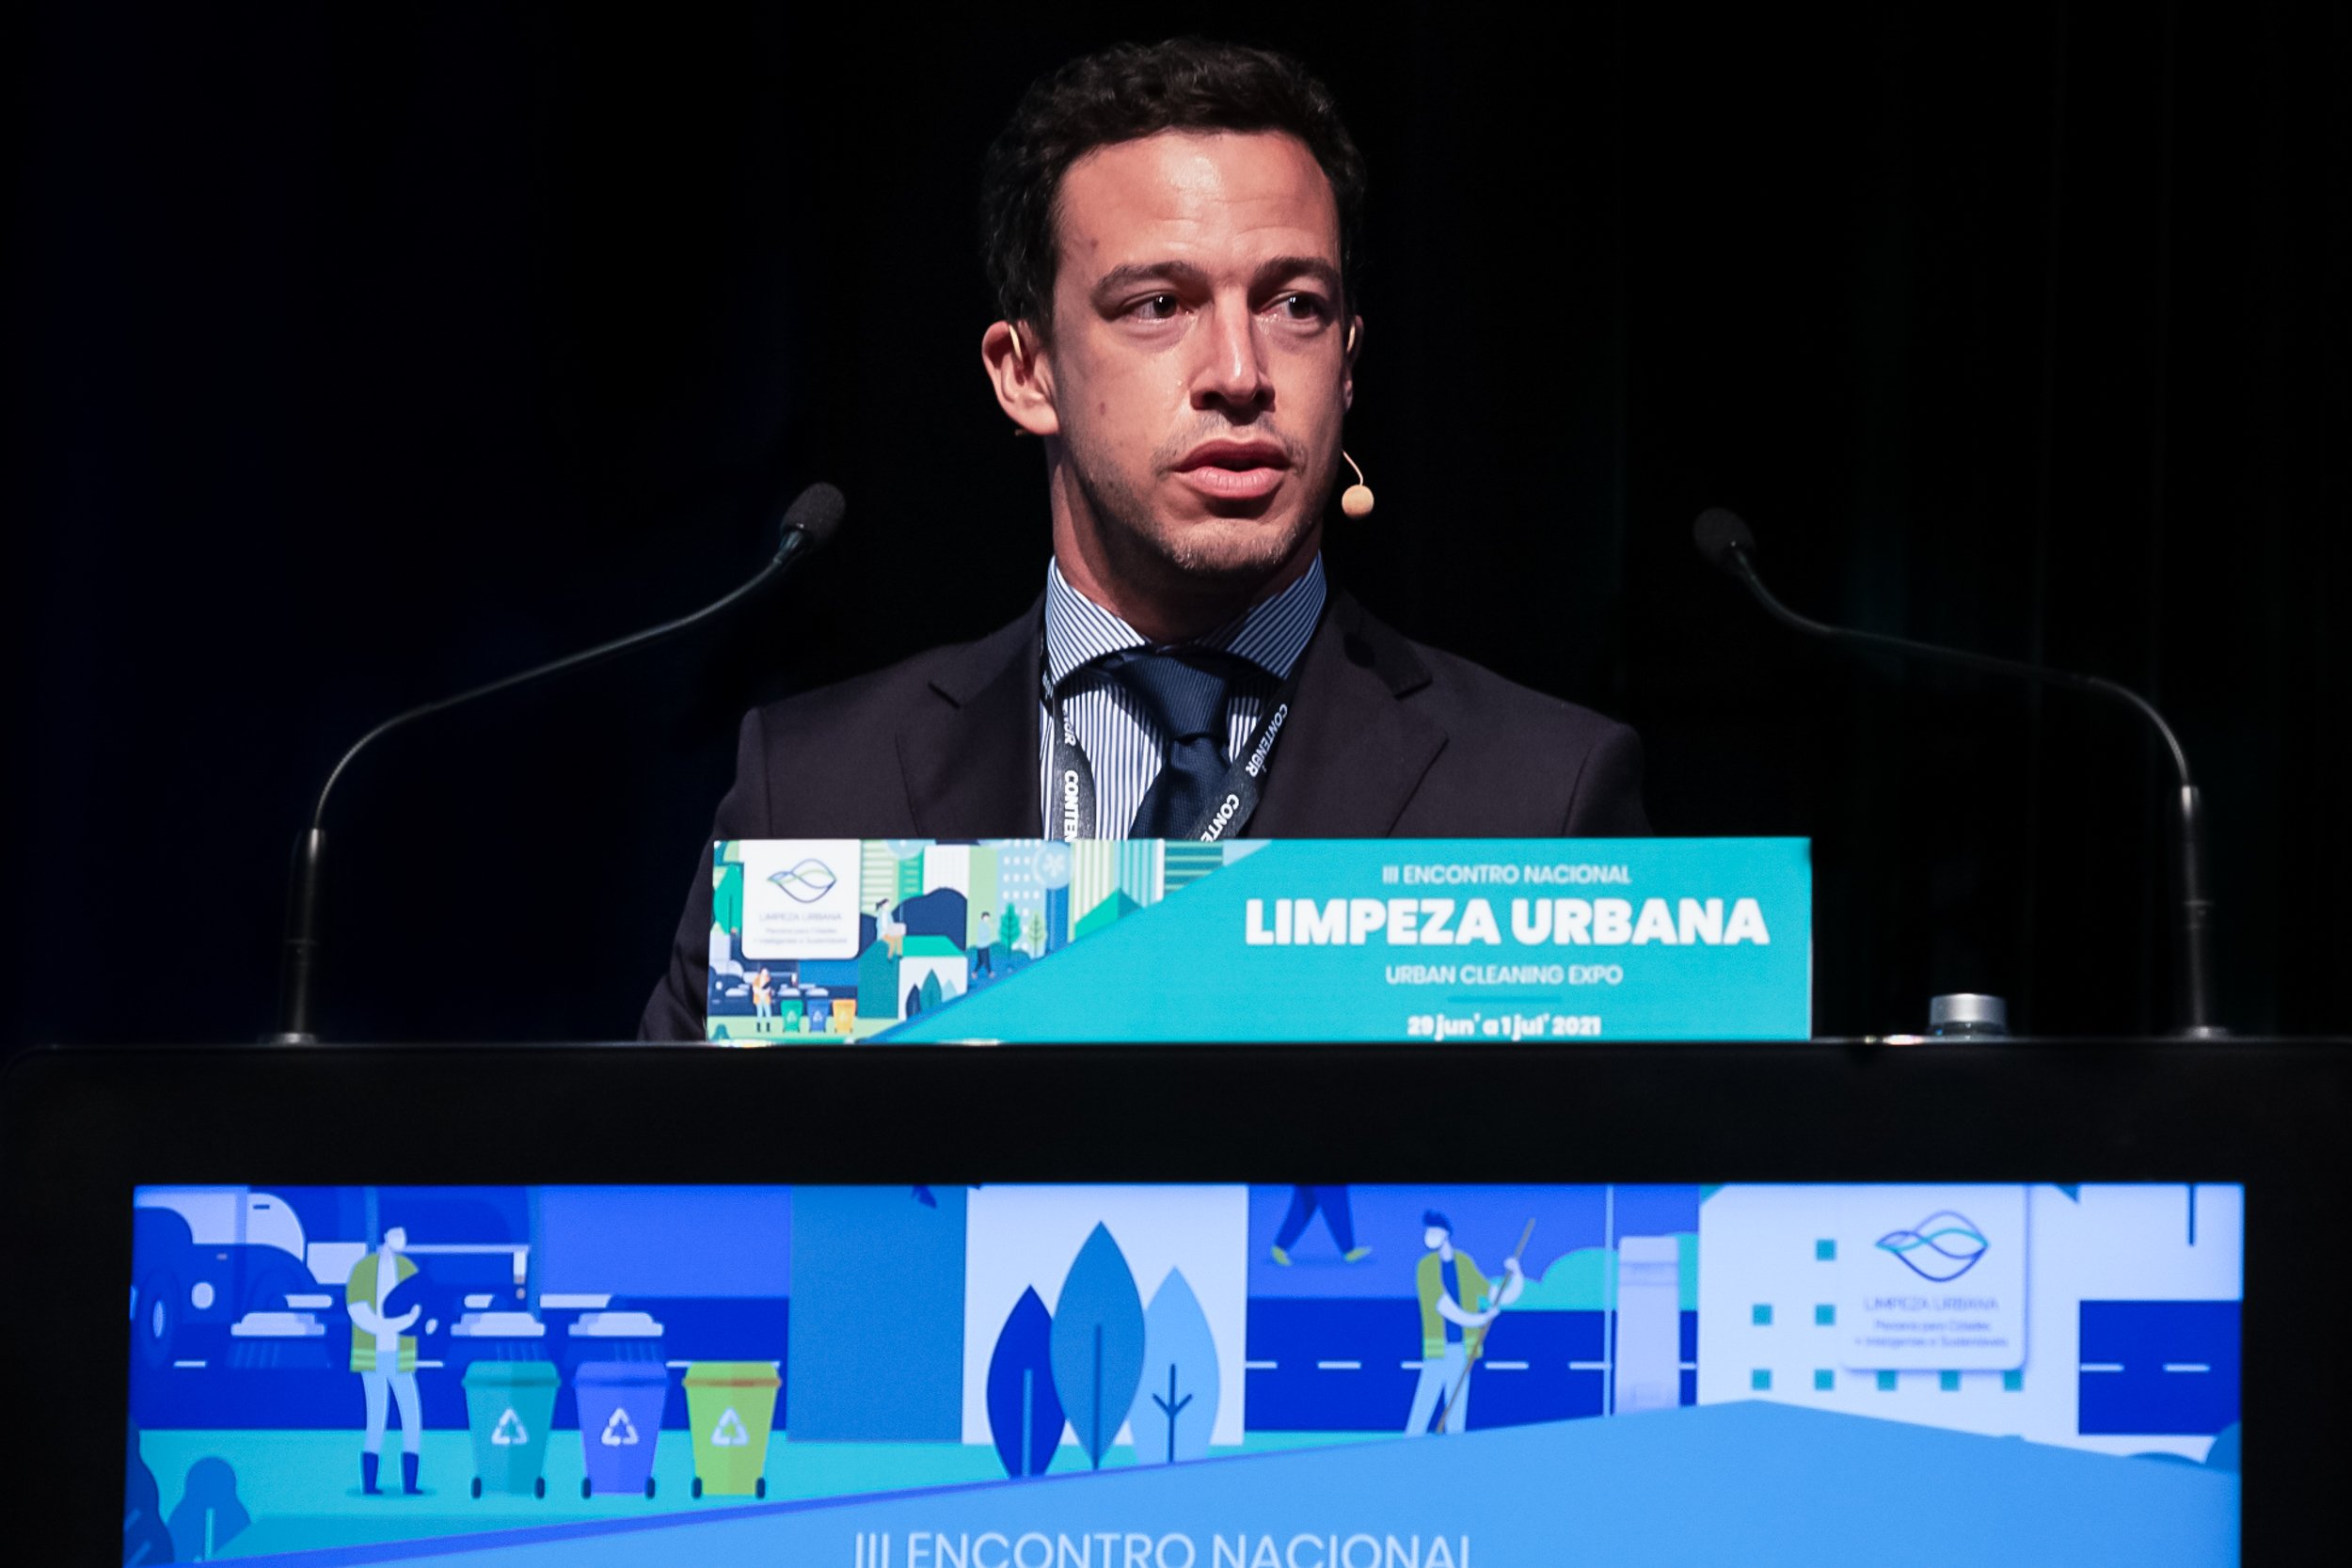  João Varela Pereira foi orador no III Encontro Nacional de Limpeza Urbana 